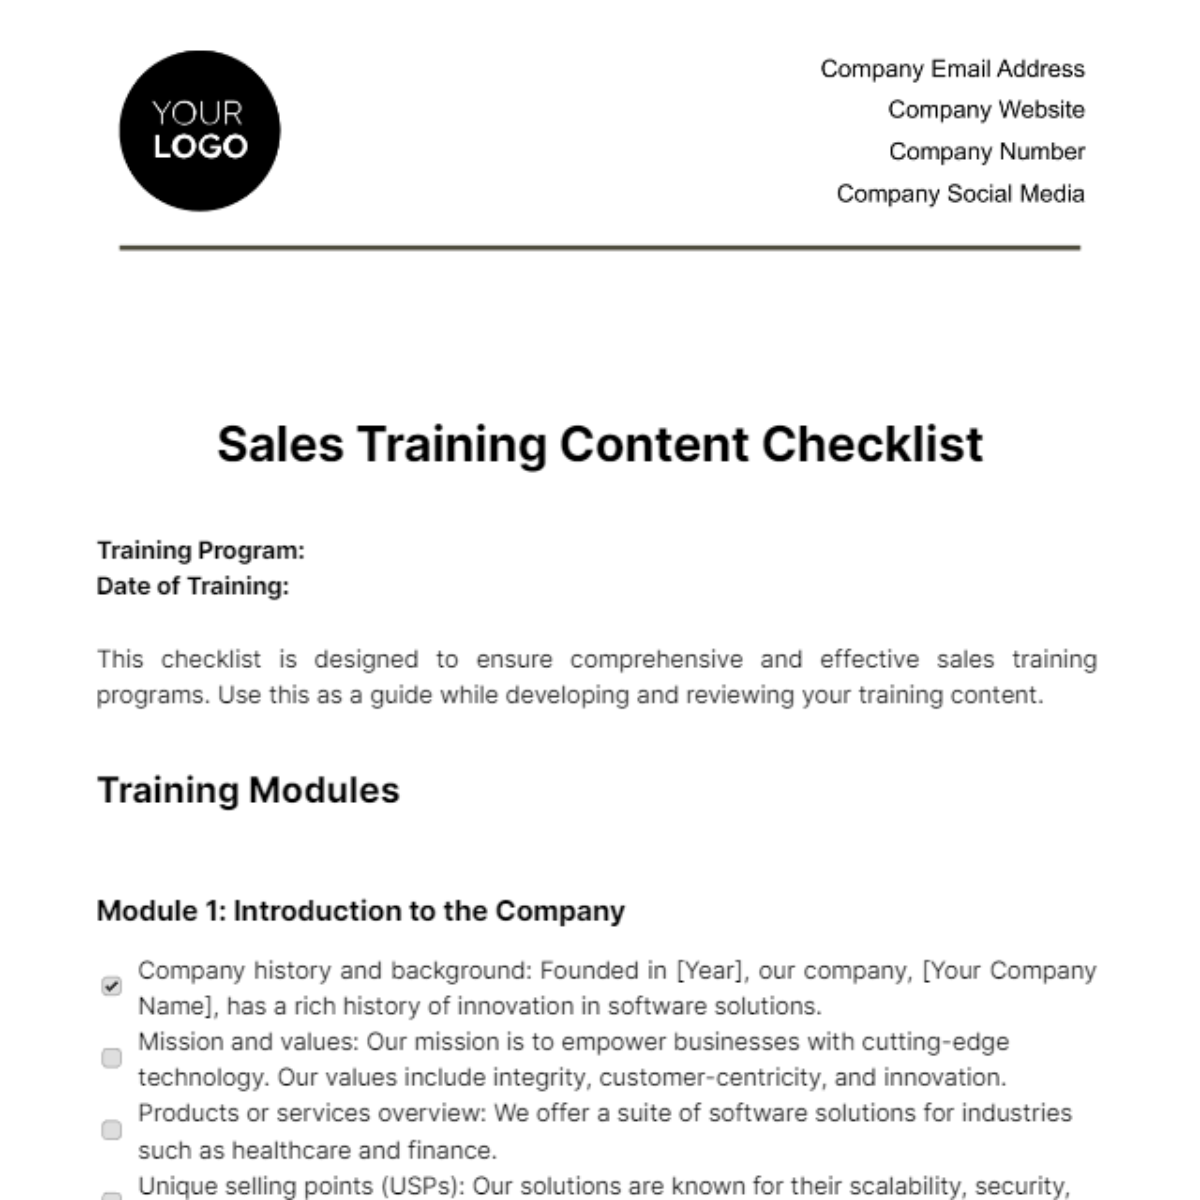 Sales Training Content Checklist Template